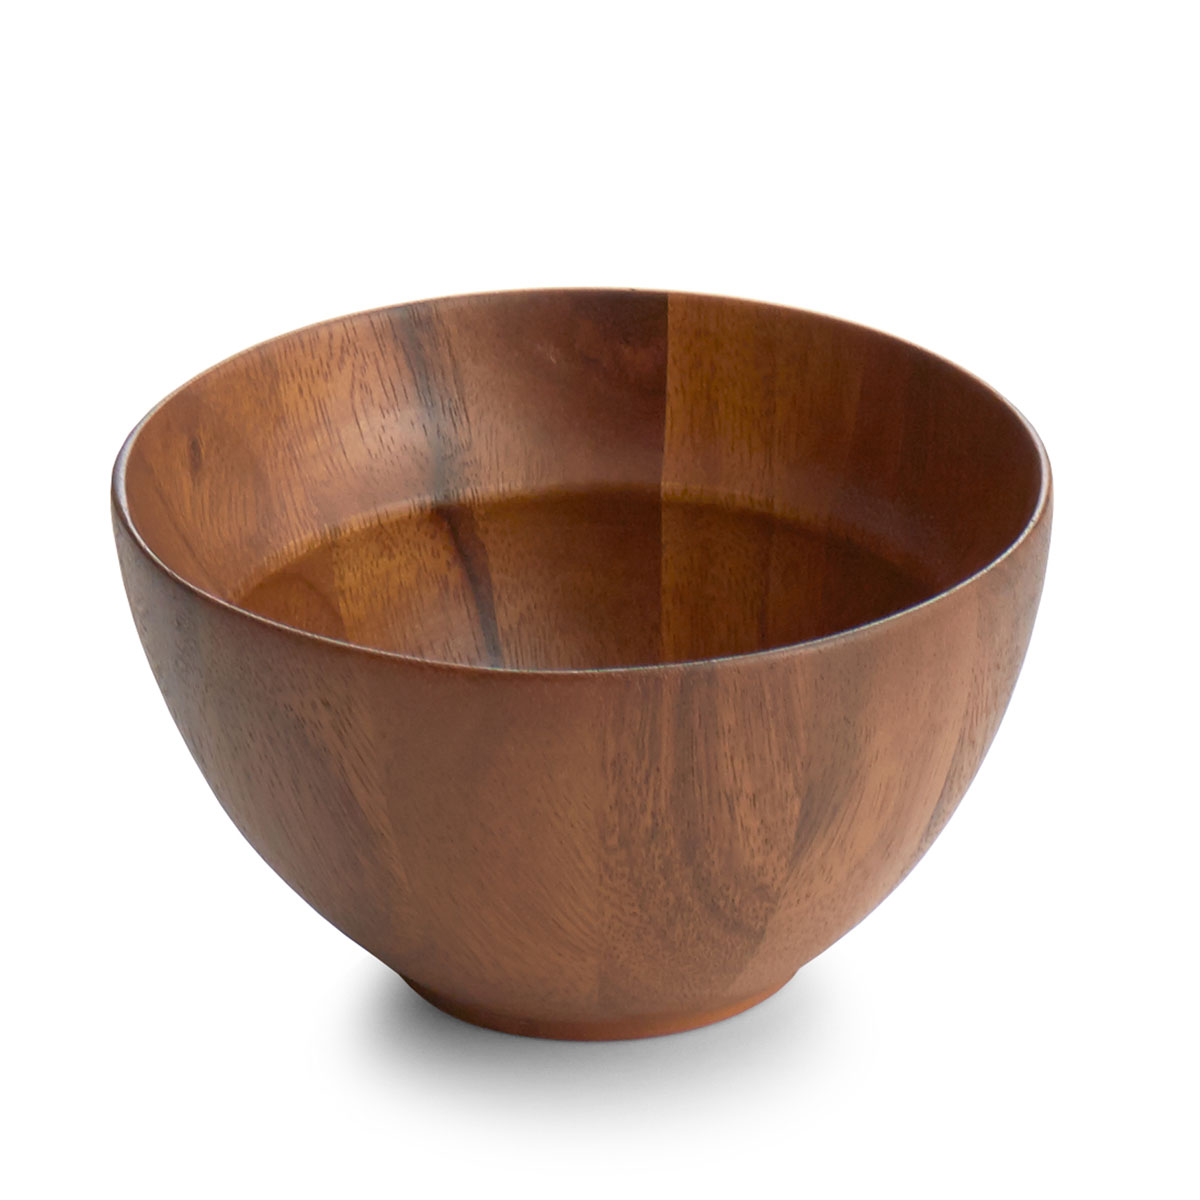 Nambe 5.75" Skye Wood All-Purpose Bowl